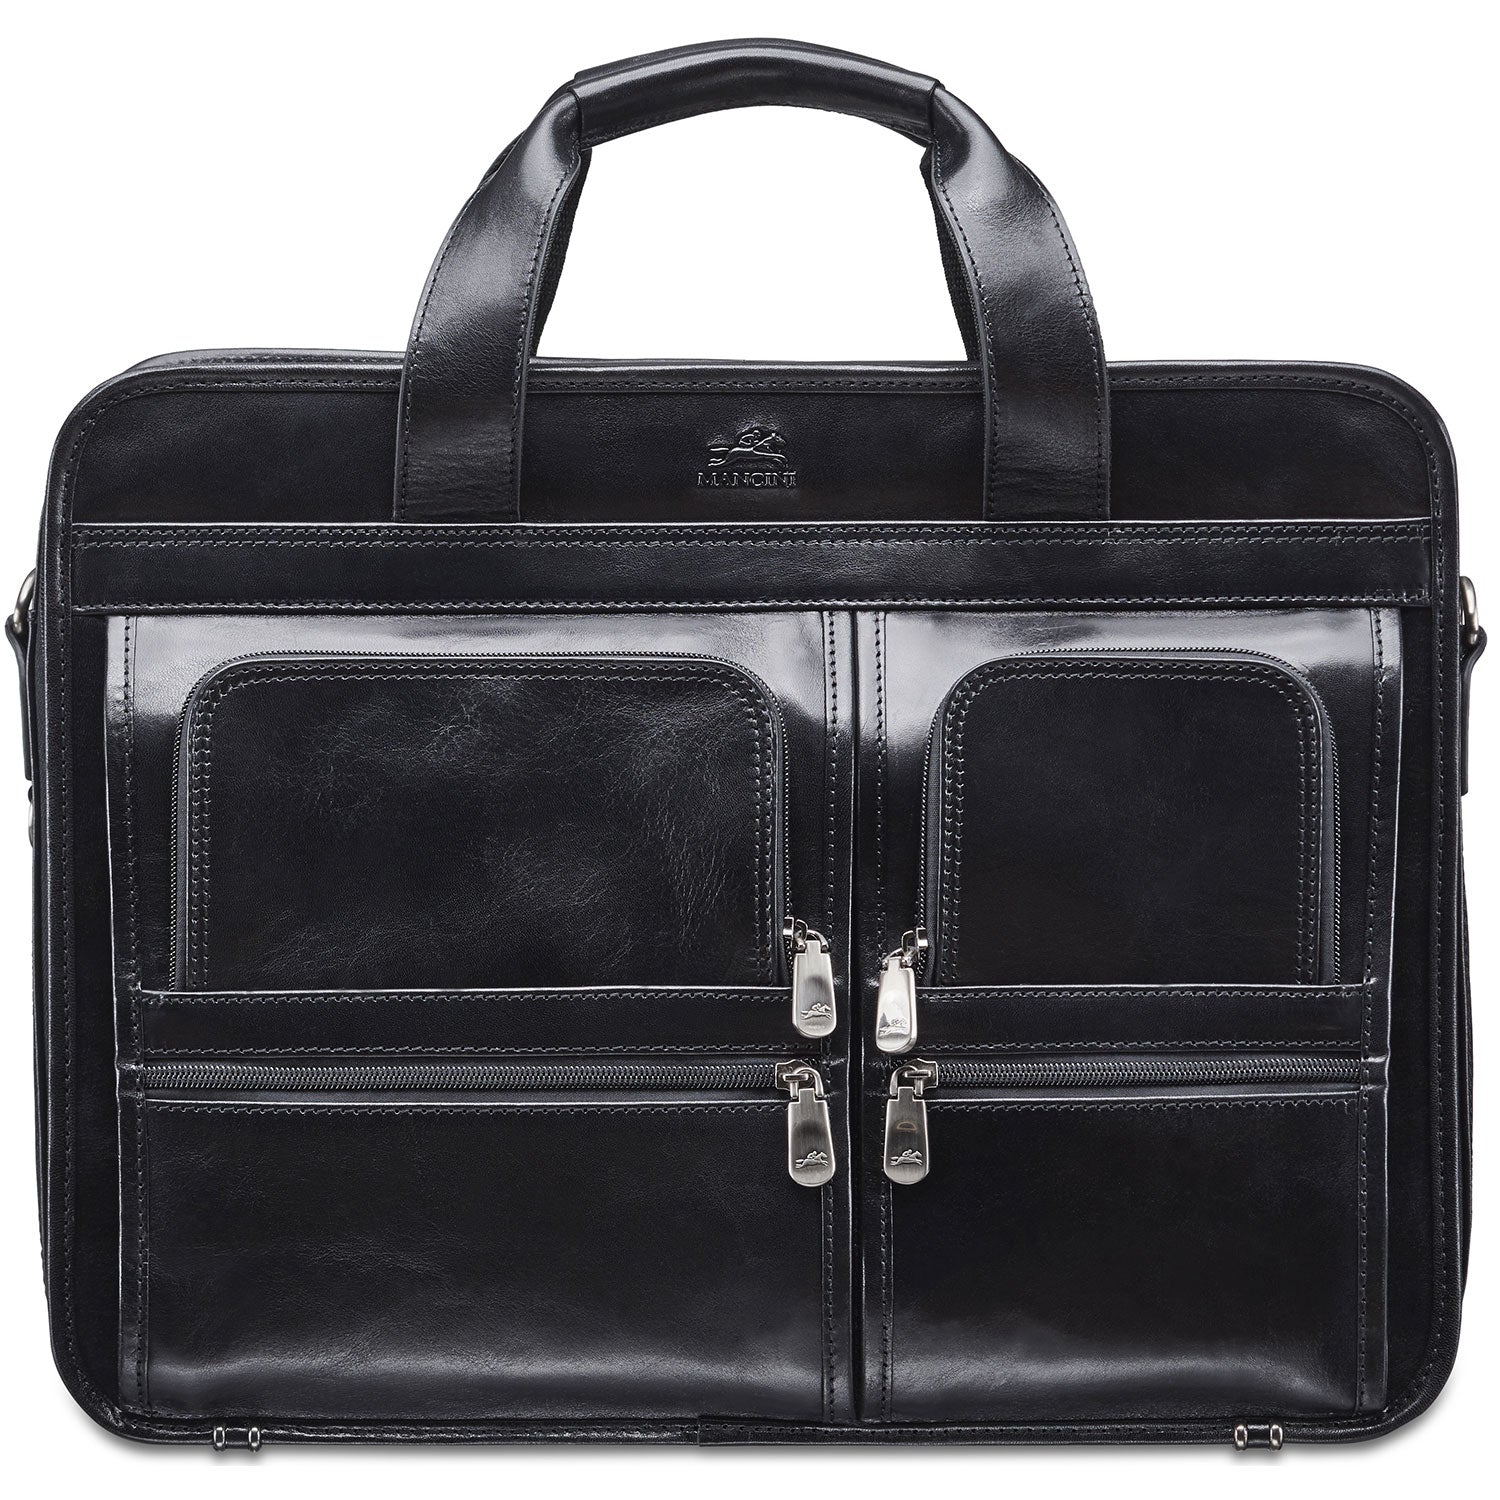 Mancini Signature Collection Laptop / Tablet Compatible Double Compartment Briefcase - Black